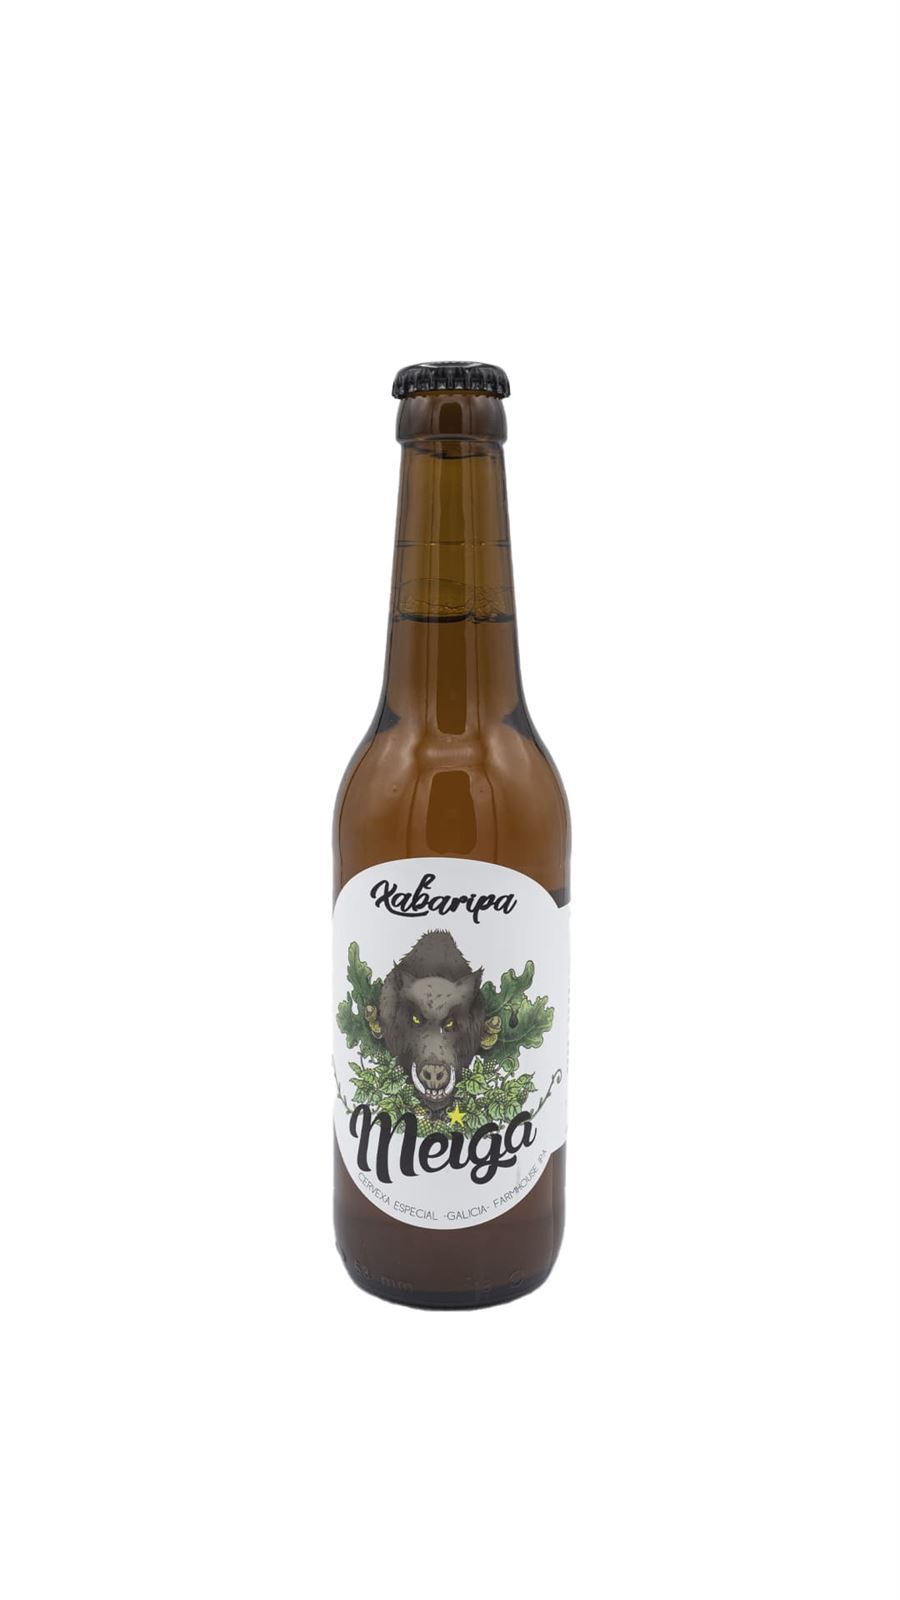 Cerveza Meiga XabarIpa (Farmhouse Indian Pale Ale) - Imagen 1